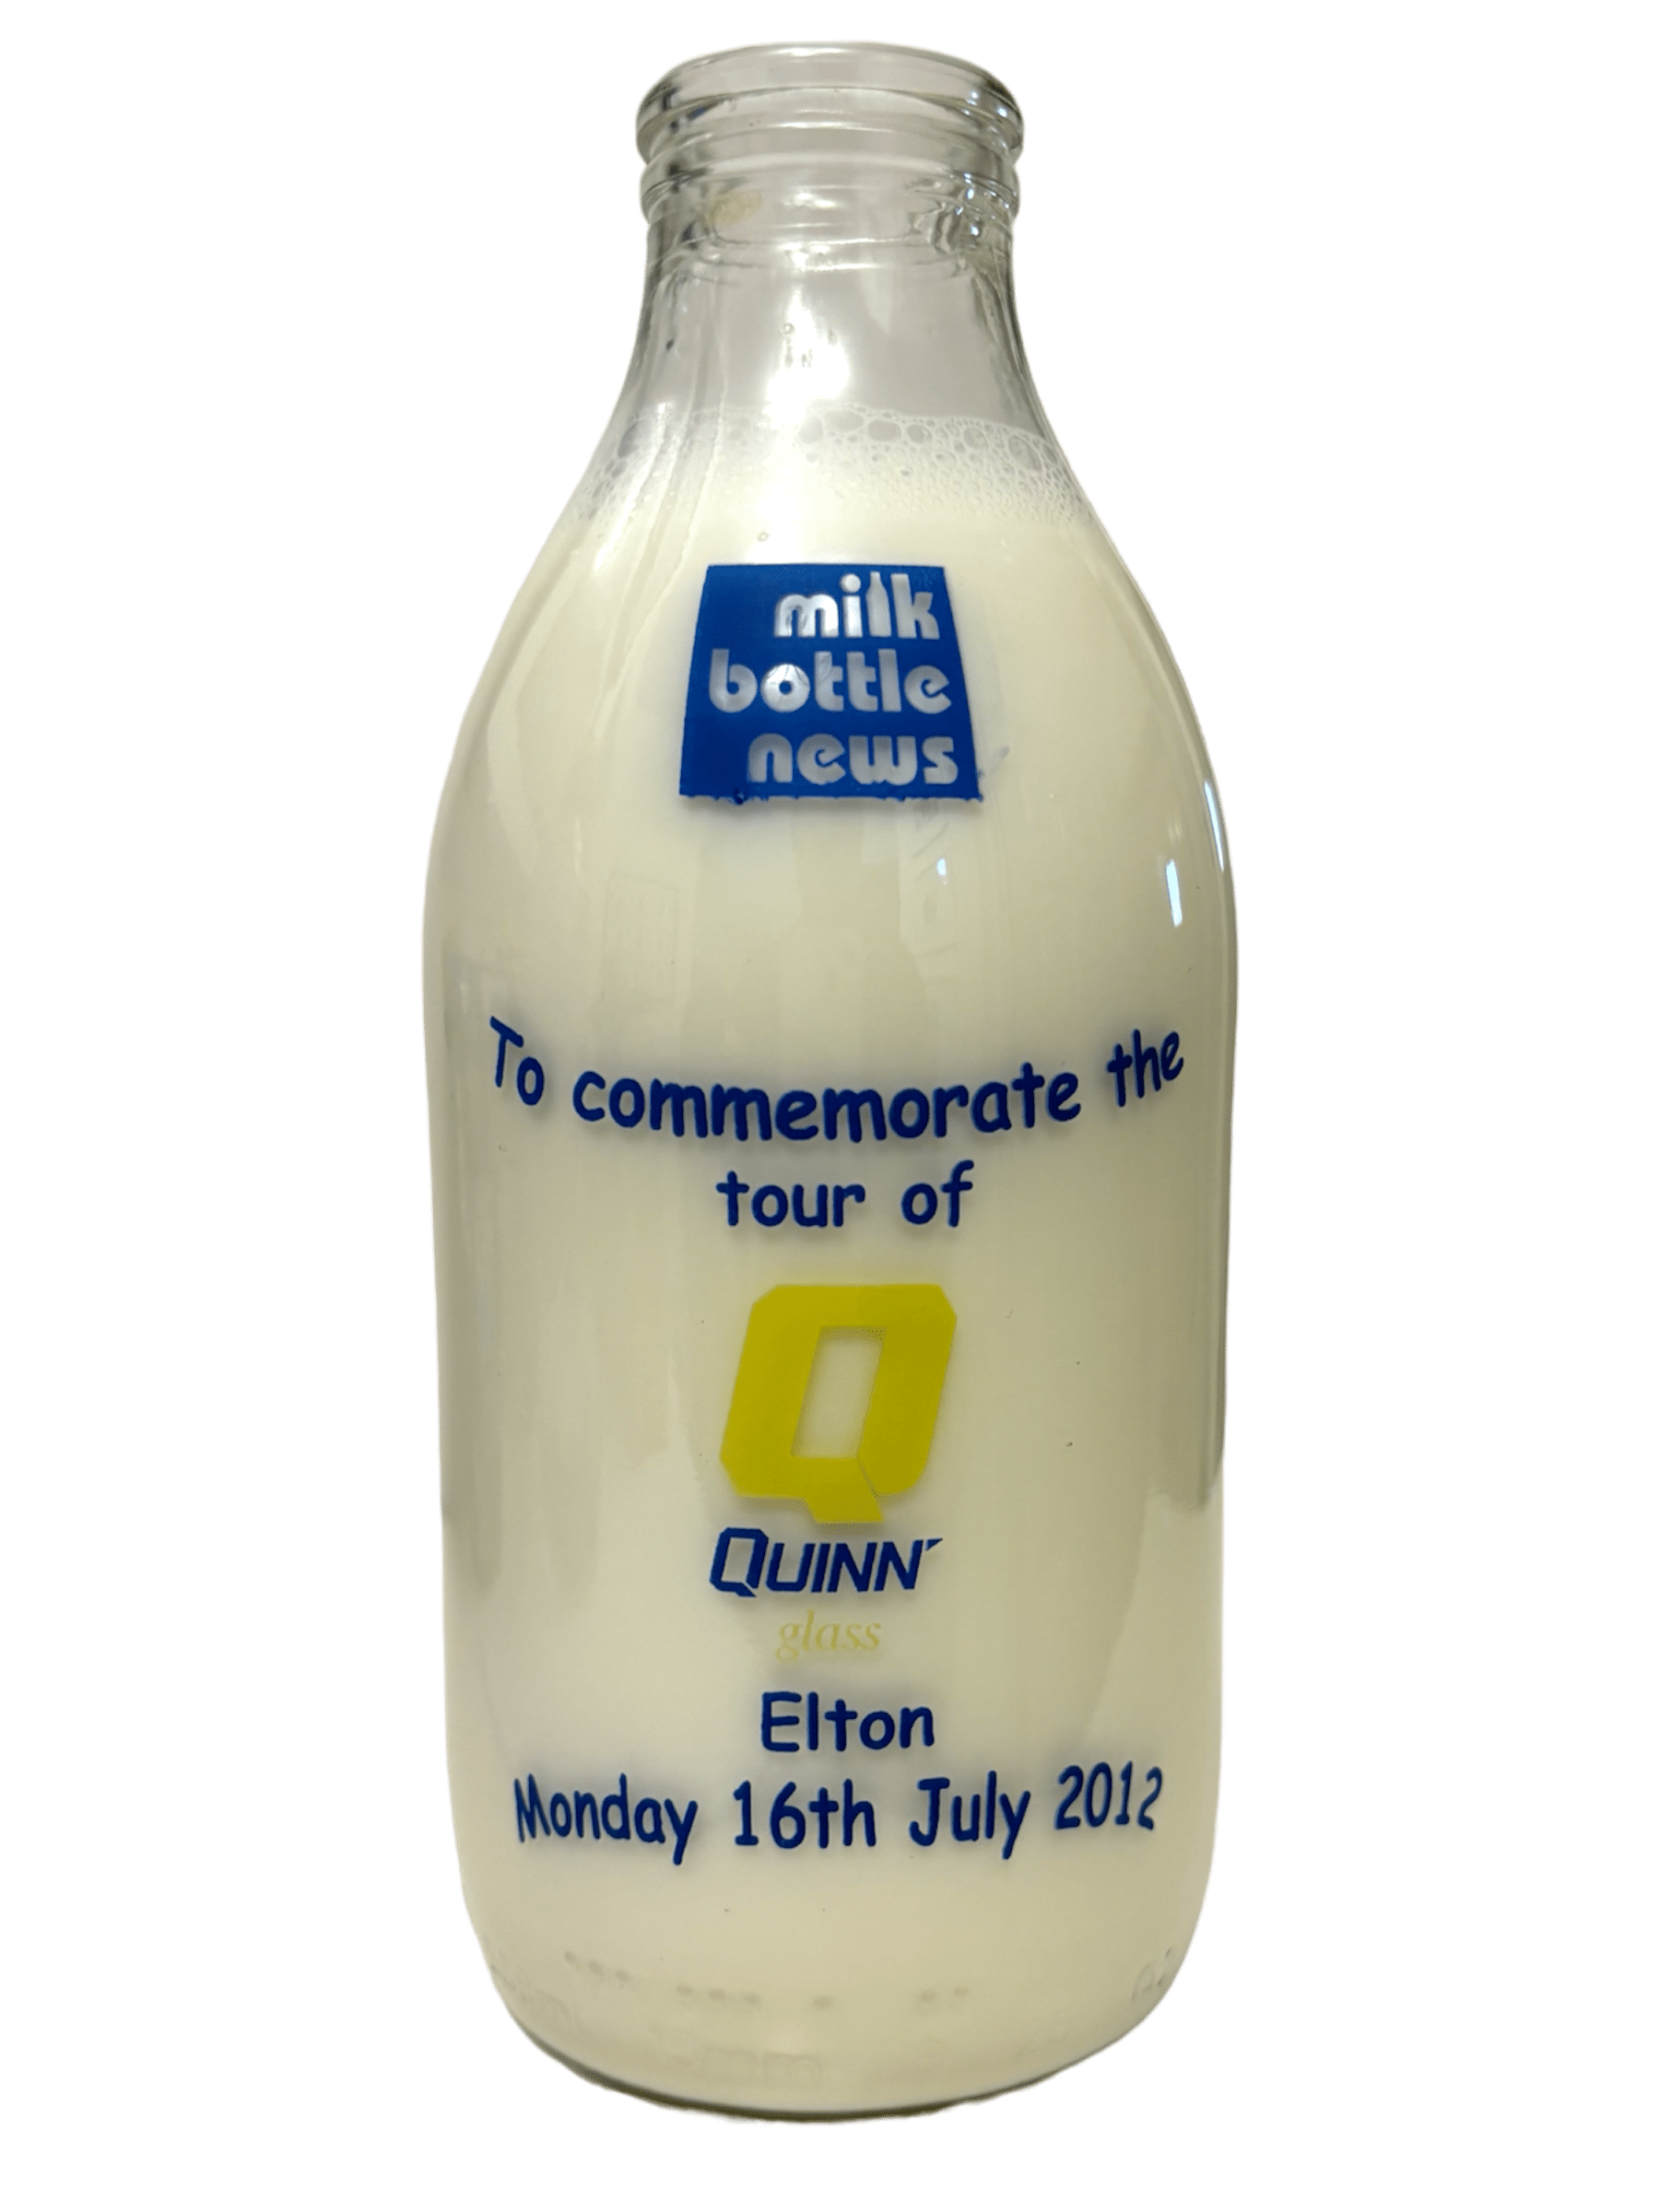 Milk Bottle News - www.Kelis.info #KelisTheBottleBank